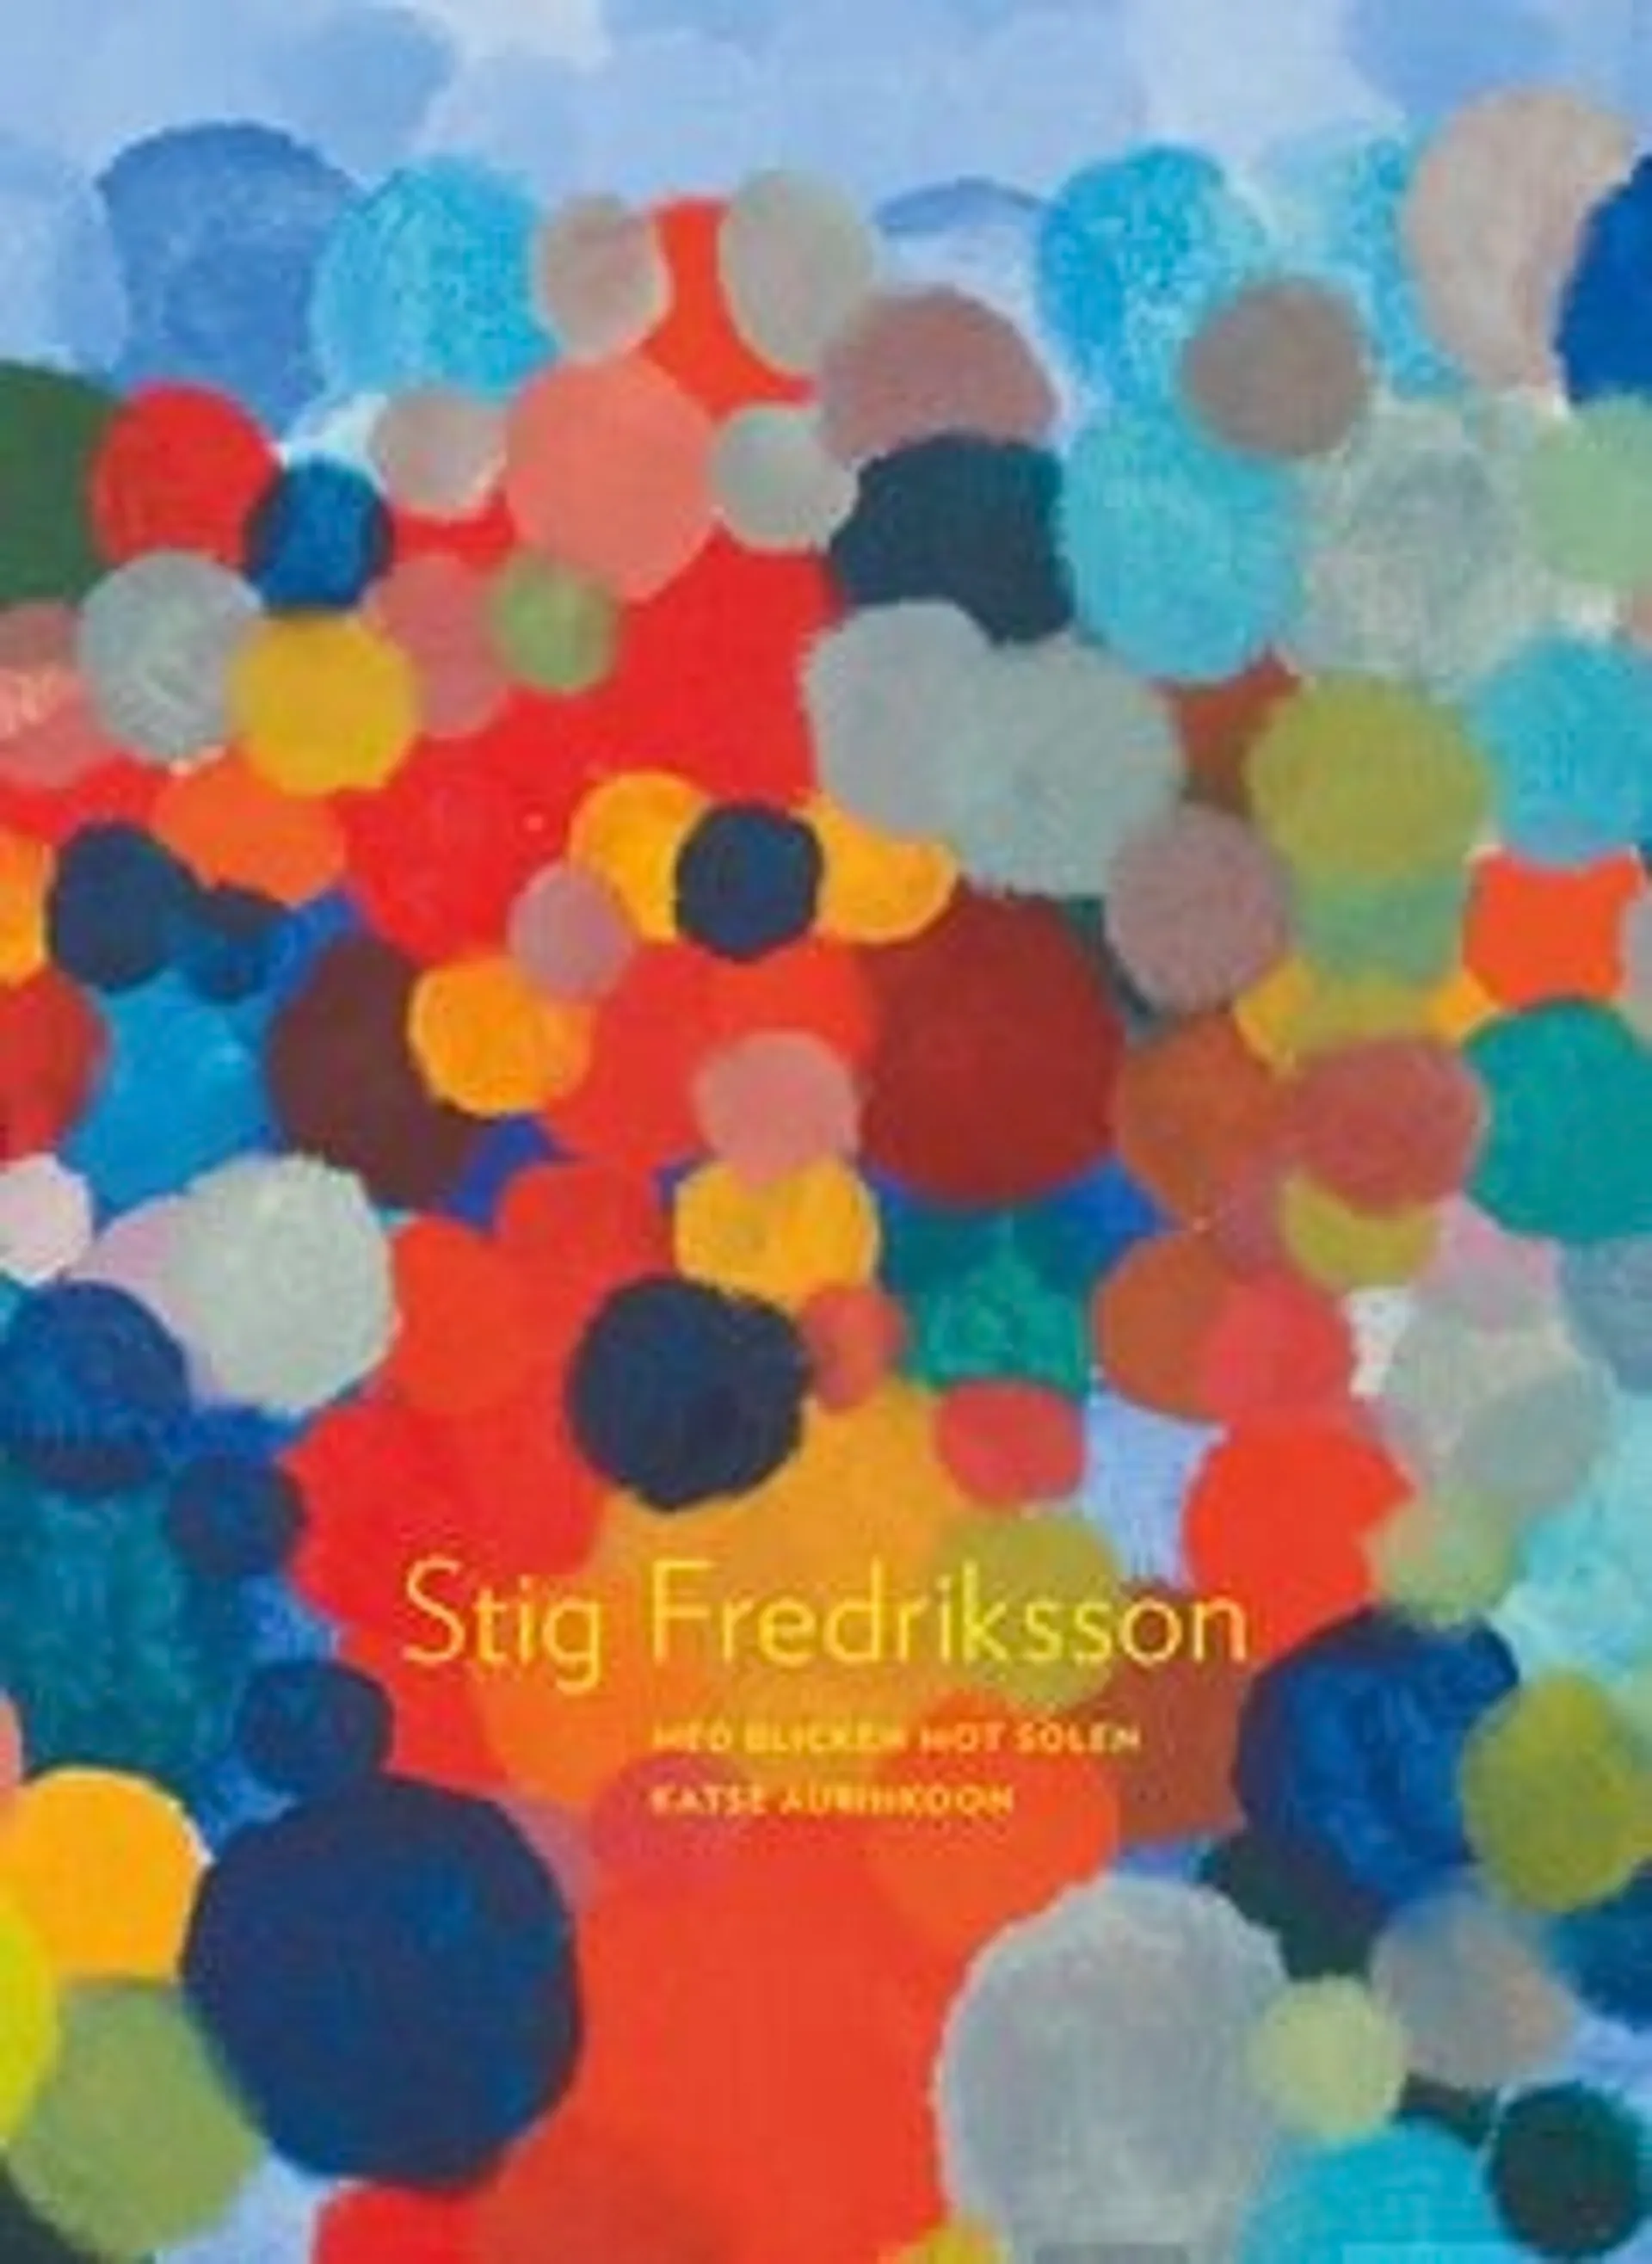 Stig Fredriksson